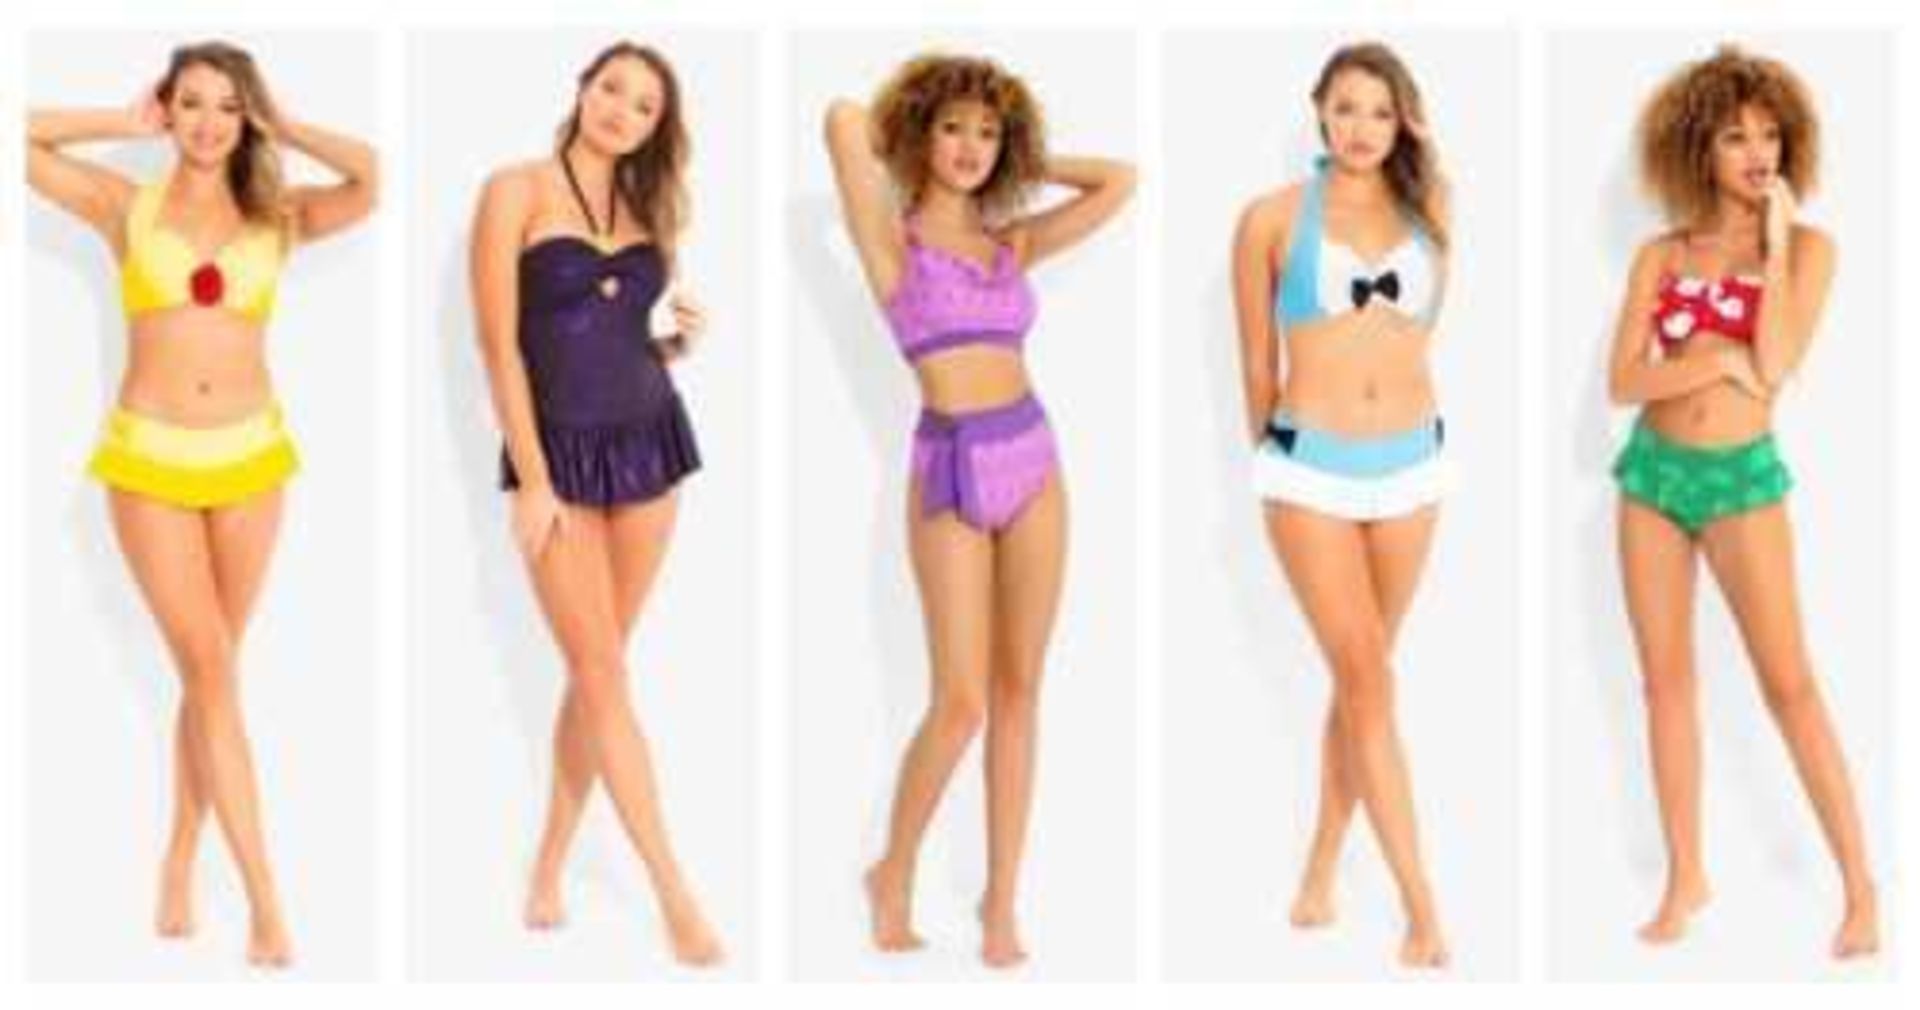 RRP £400 Lot Contain 20 Brand New Assorted Ladies High-End Debenhams Designer Ladies Swimwear